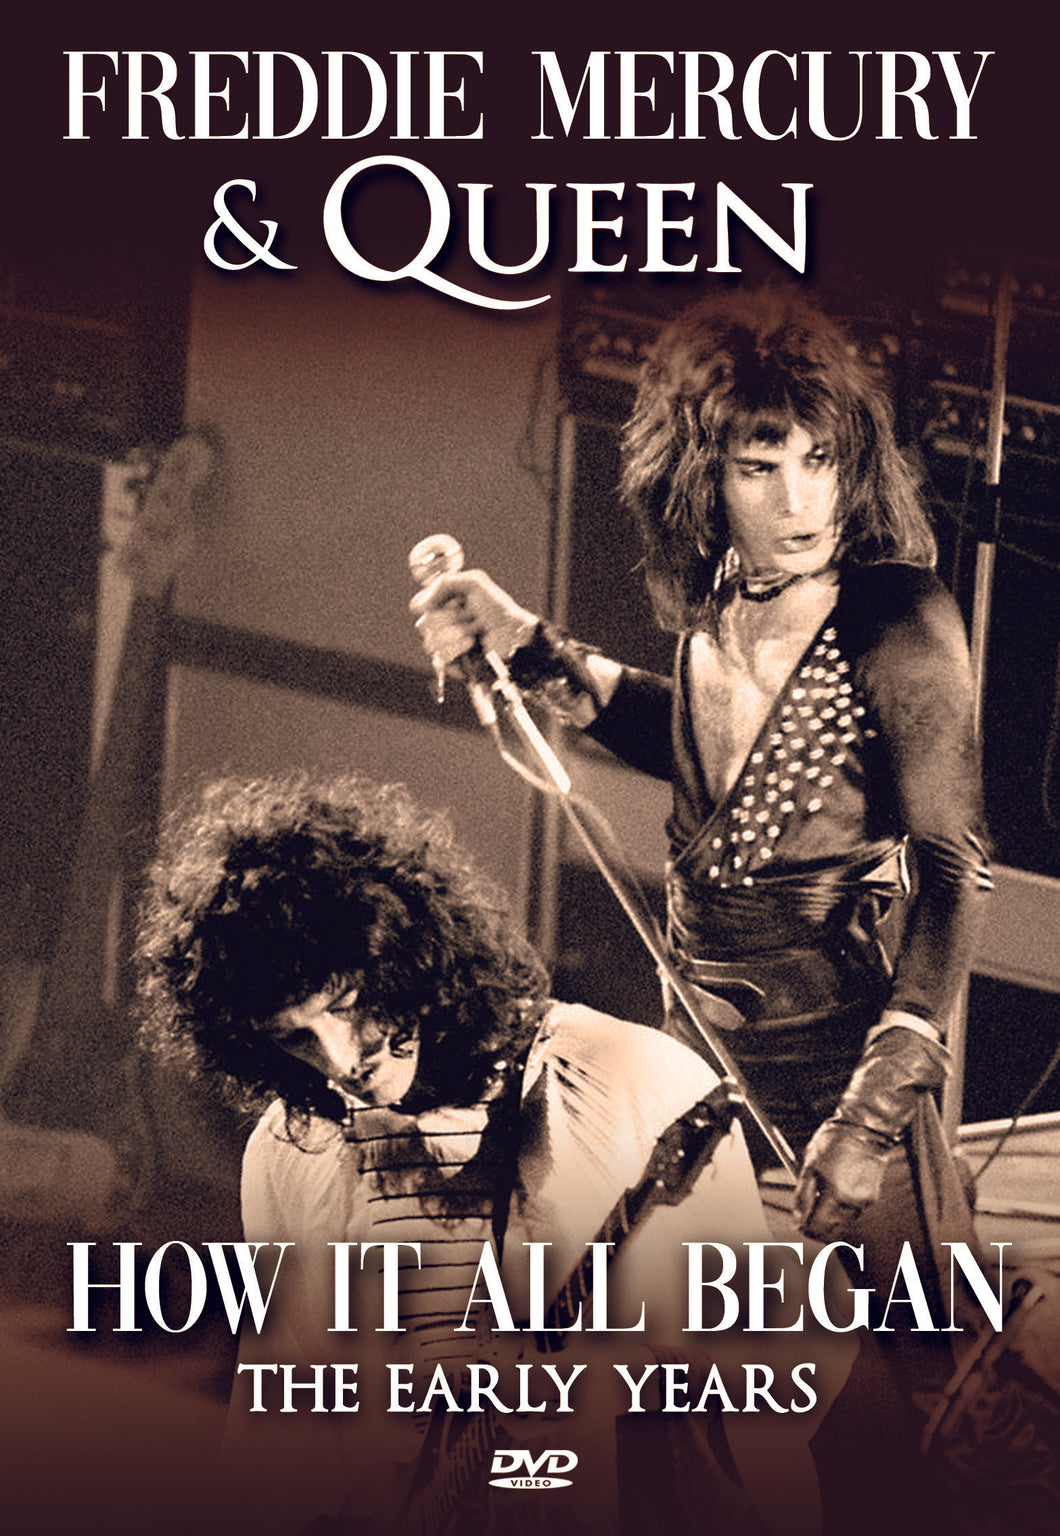 Freddie Mercury & Queen - How It All Began (DVD)